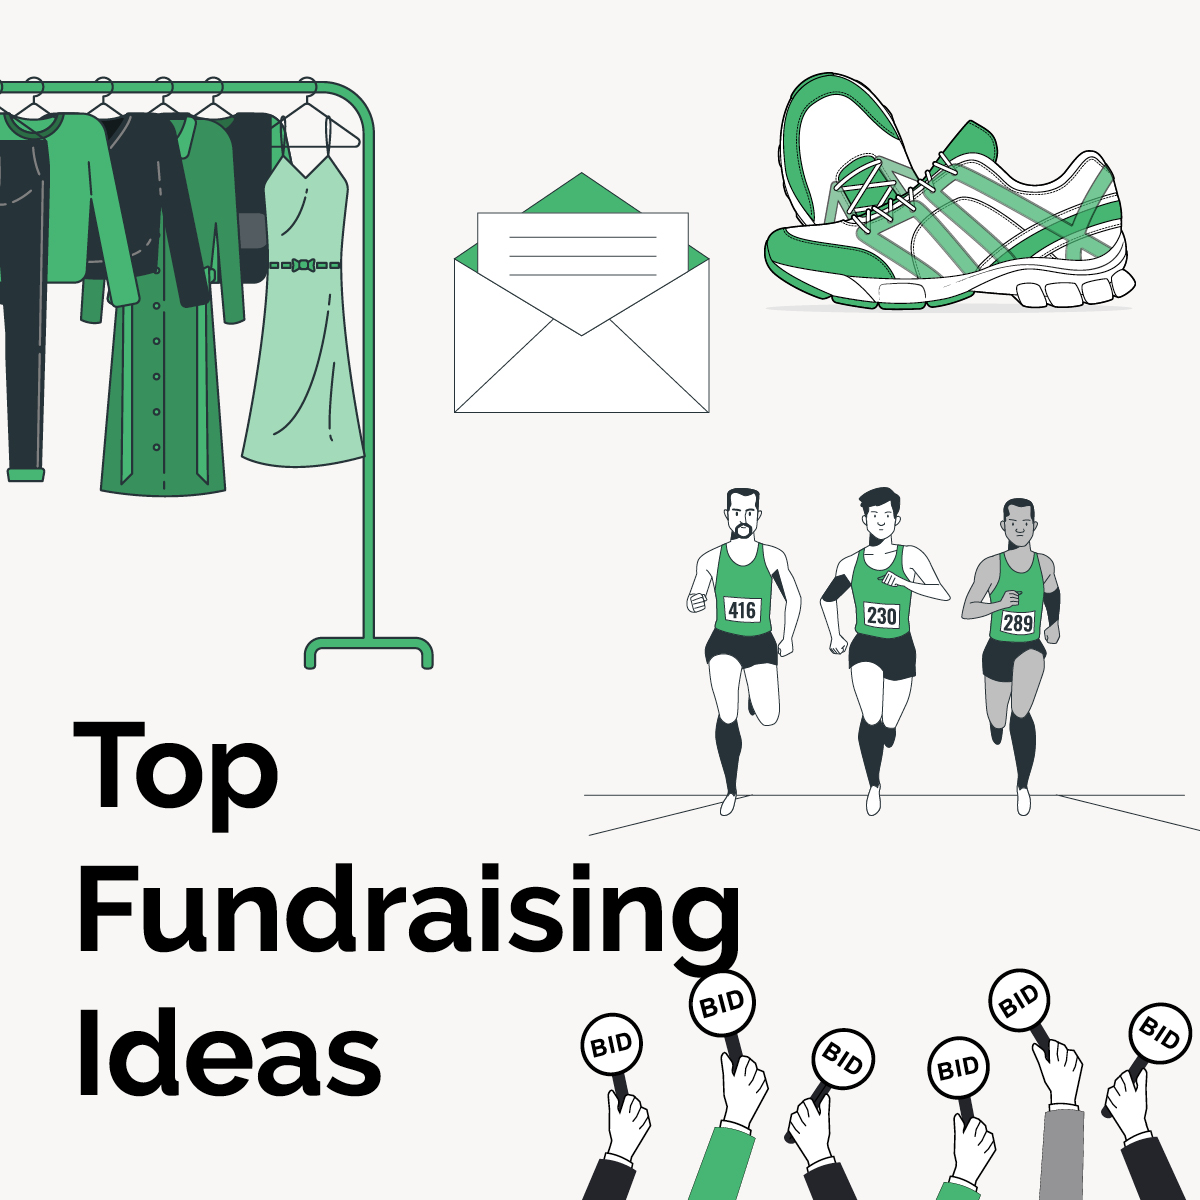 Top fundraising ideas